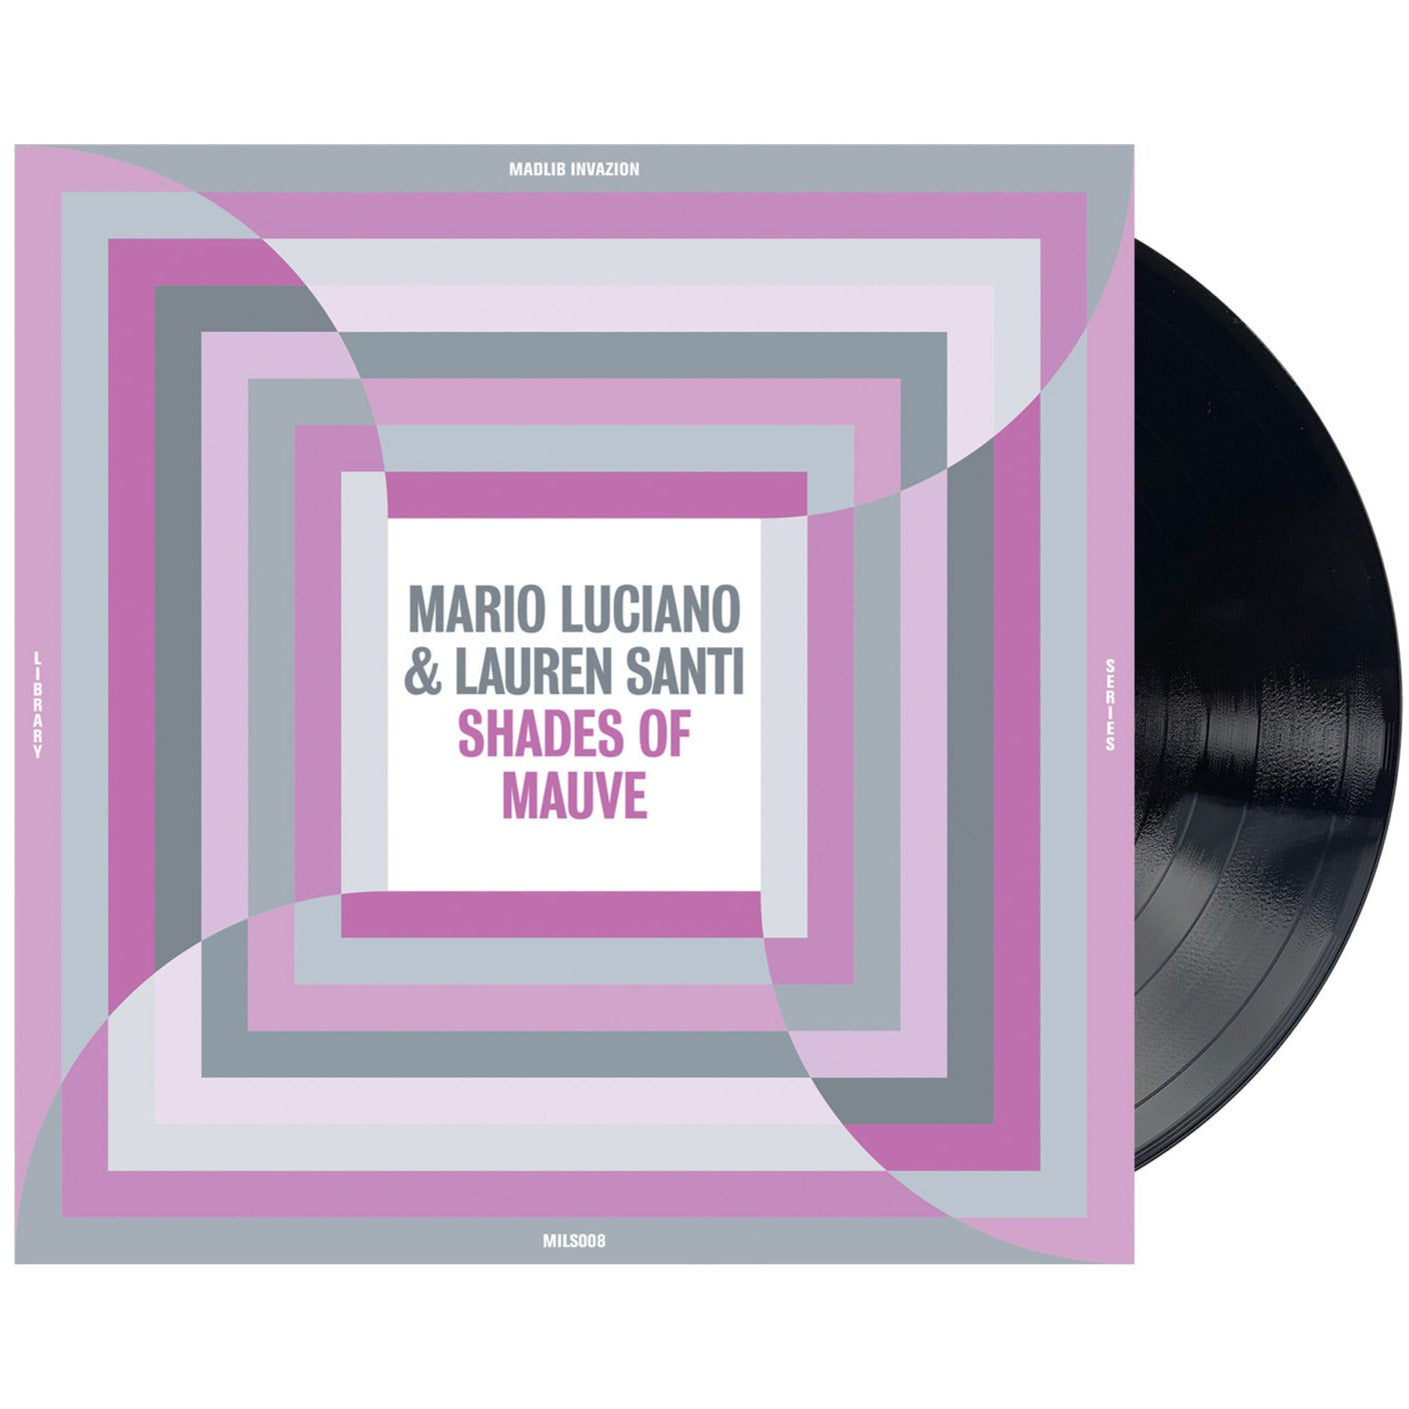 Mario Luciano & Lauren Santi - Shades Of Mauve (Madlib Invazion Music Library Series #8)